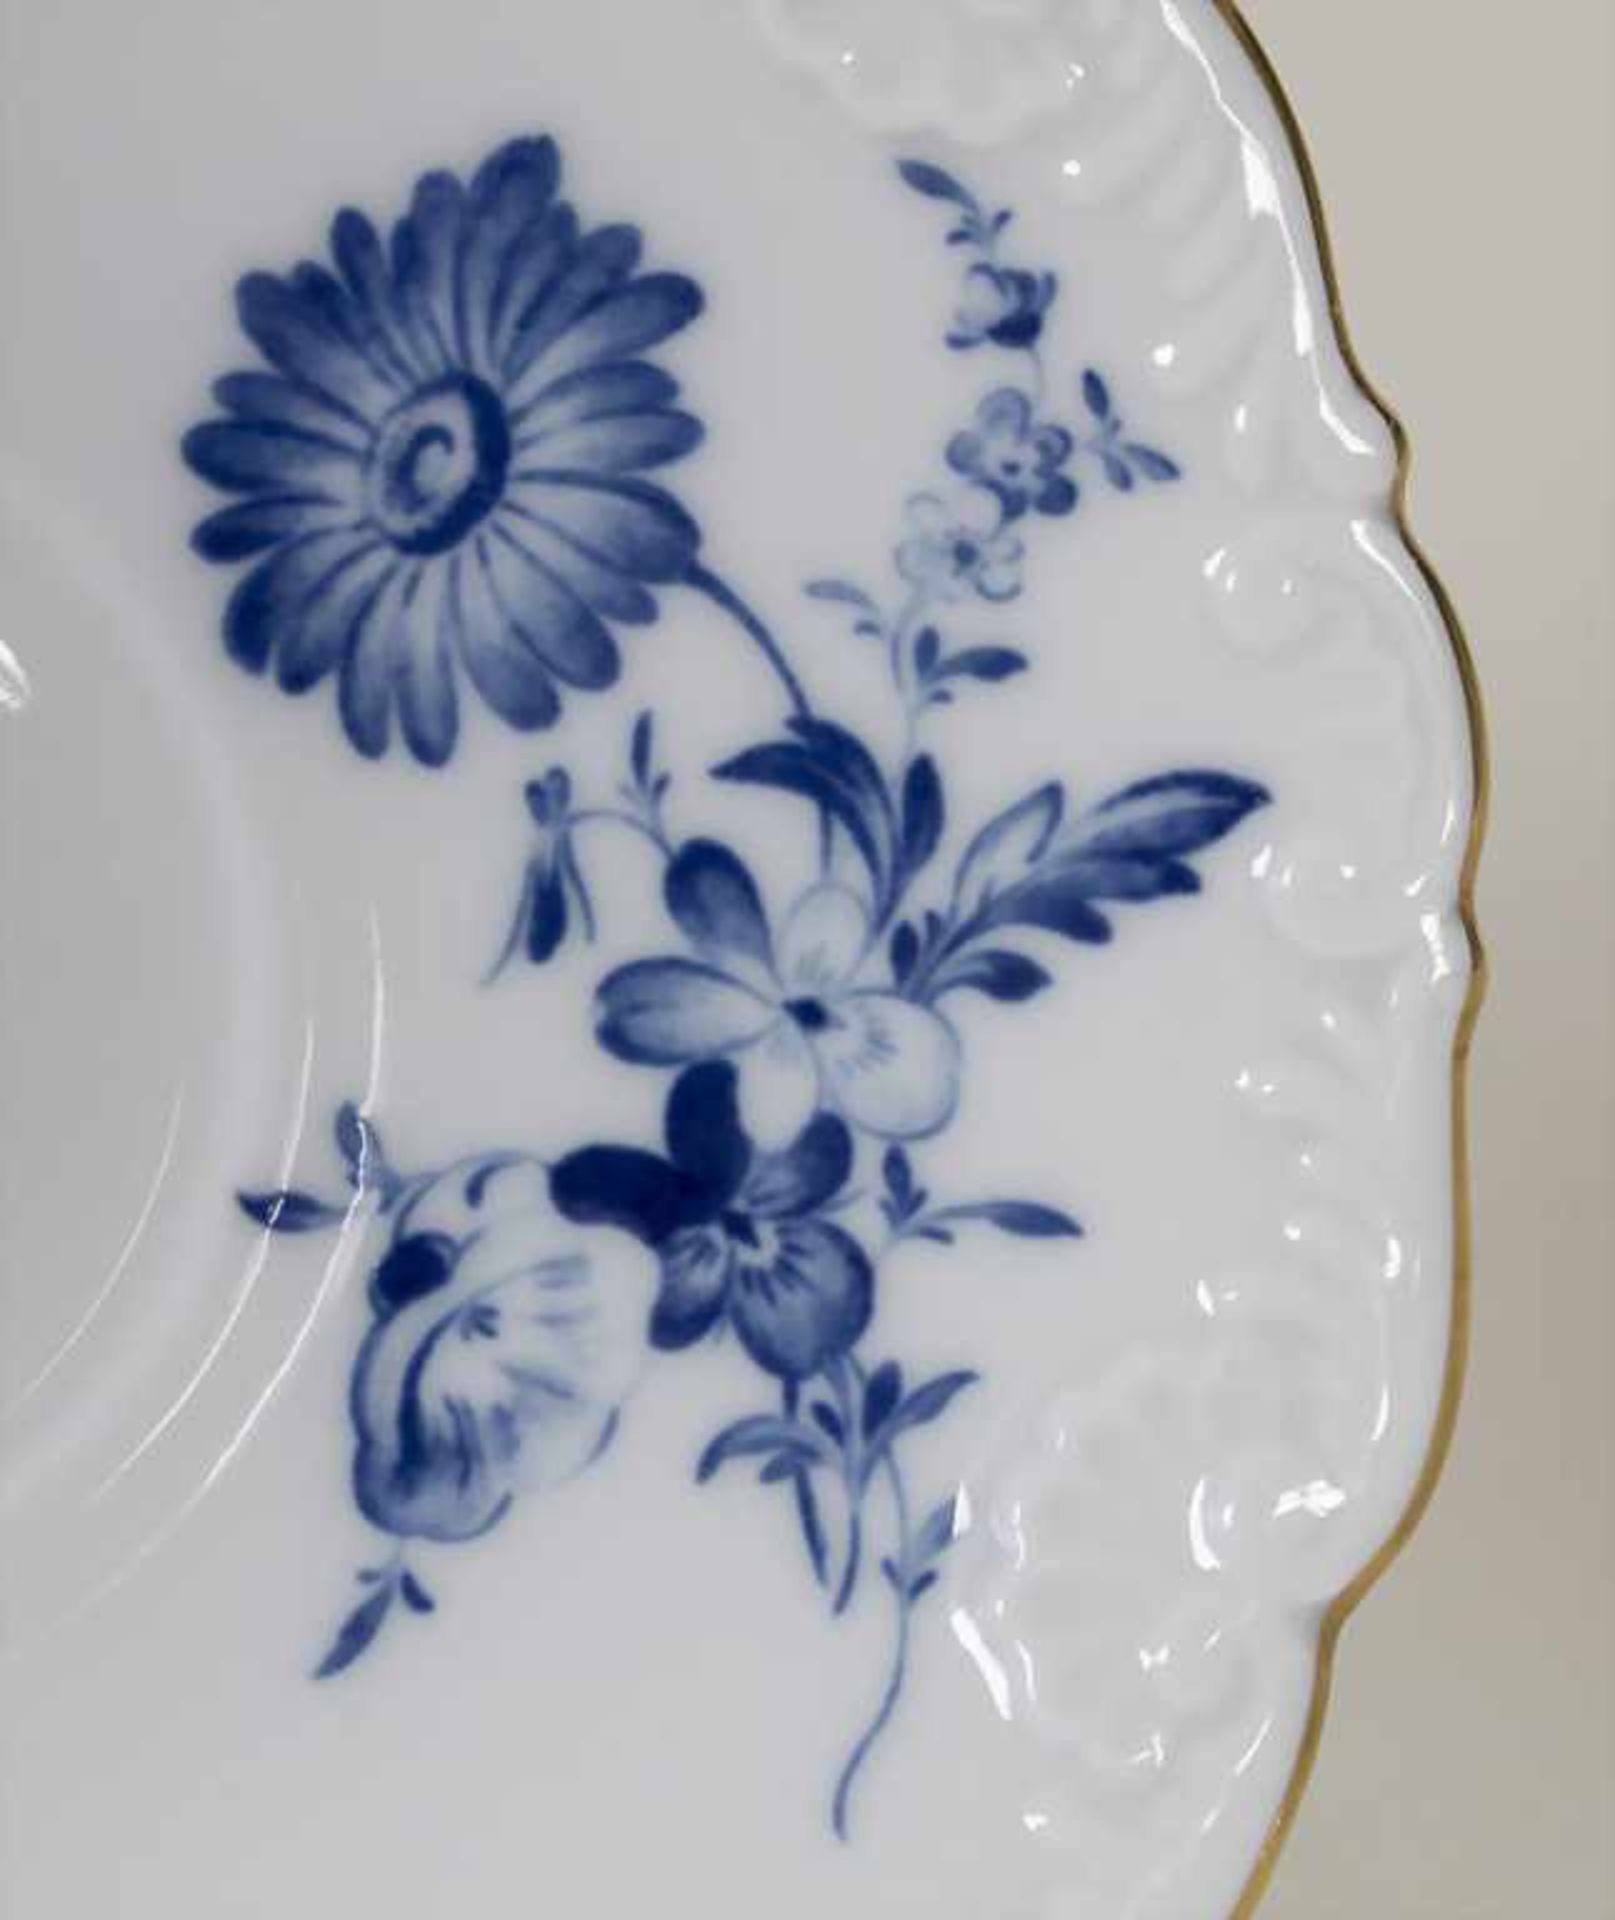 2 Mokkatassen mit Untertassen 'Blaue Blume' / A set of 2 mocha cups and saucers 'Blue Flower', - Image 7 of 14